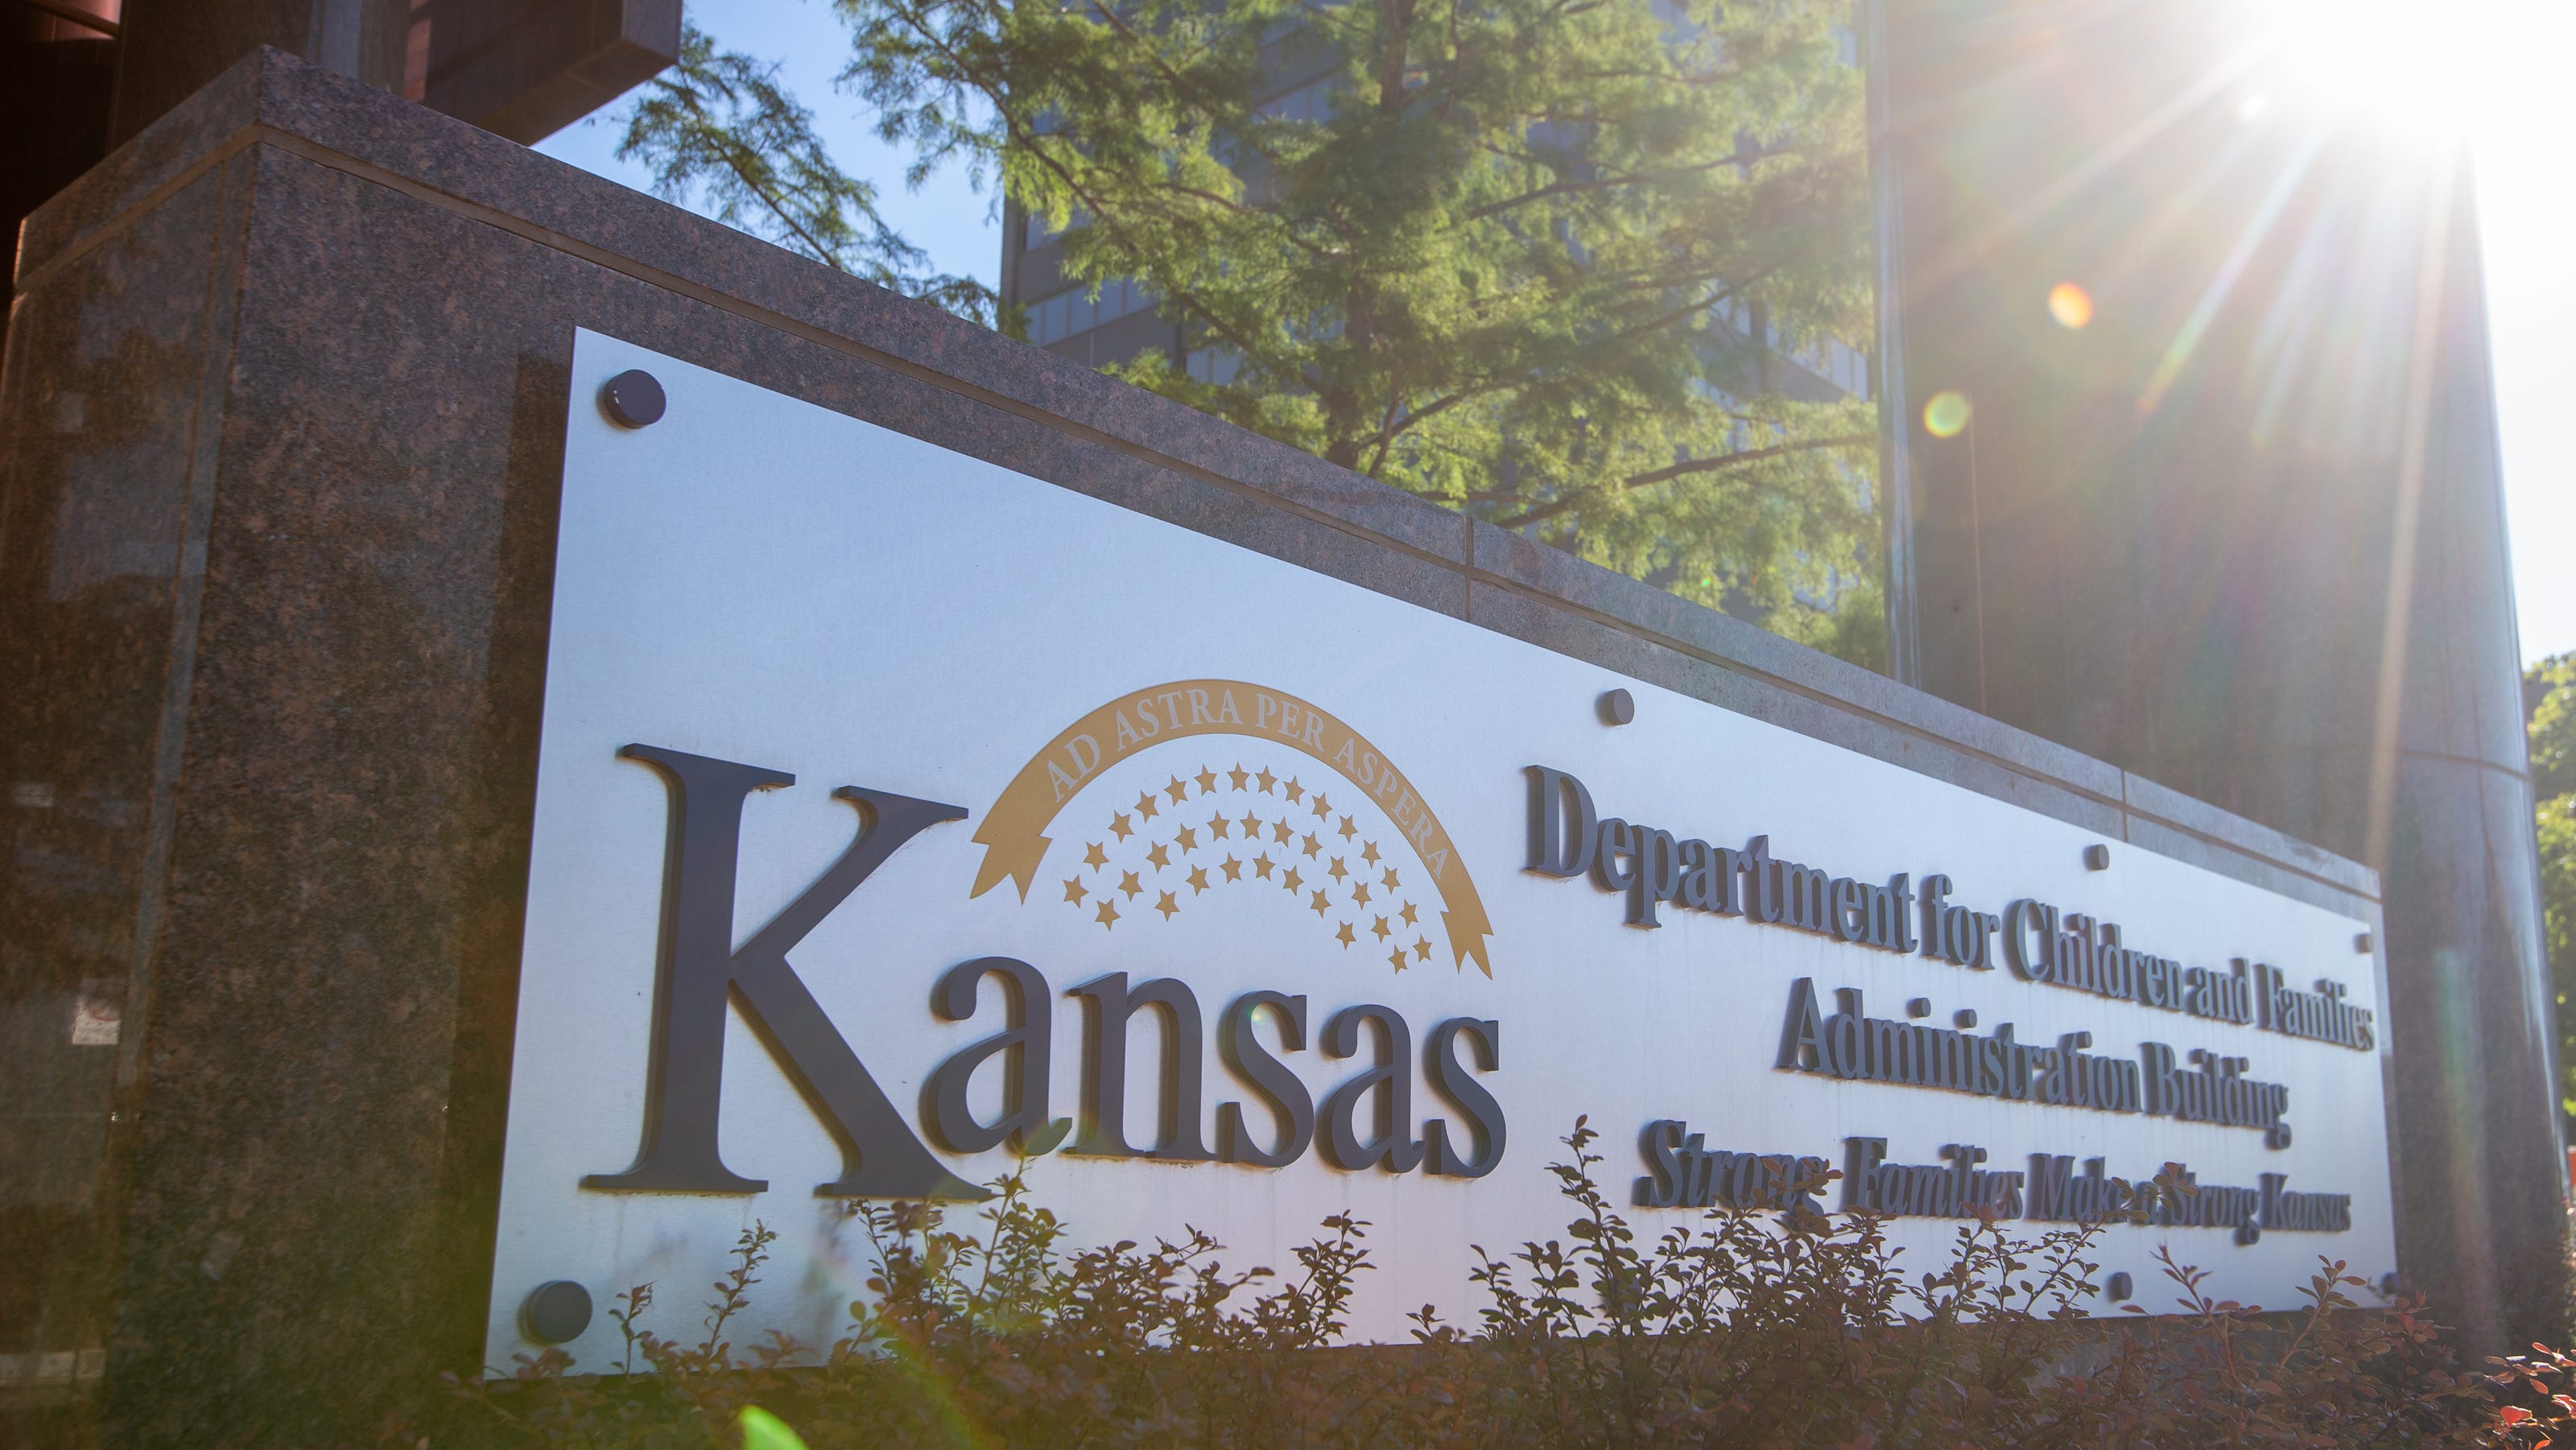 Kansas foster care system still lags on key metrics, new report says